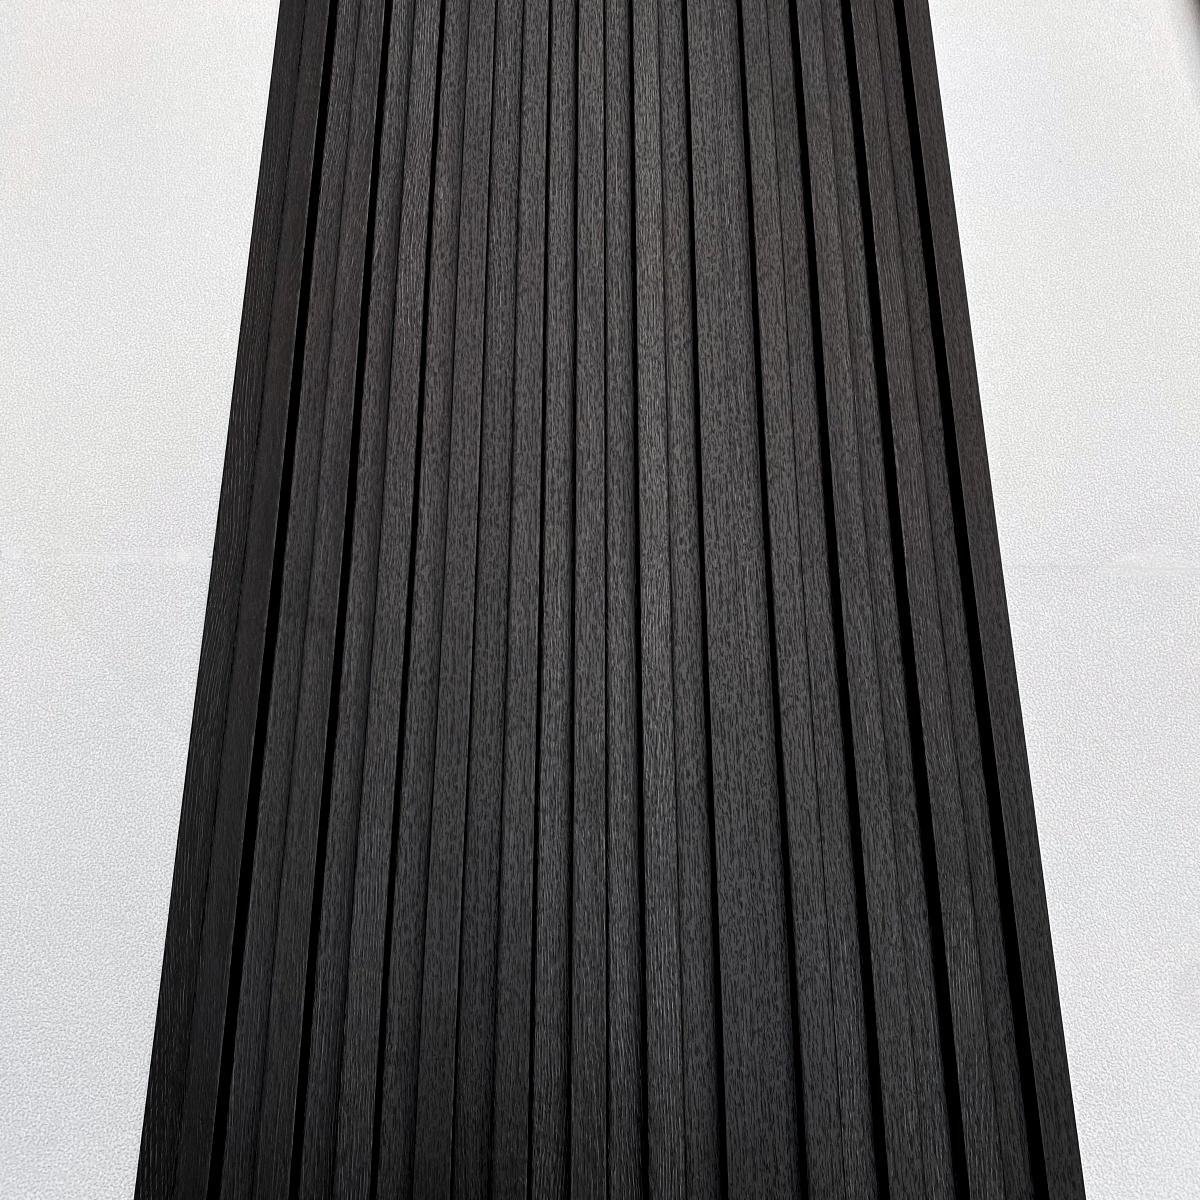 Painel Ripado Wpc 290x16cm Black R74 - 1